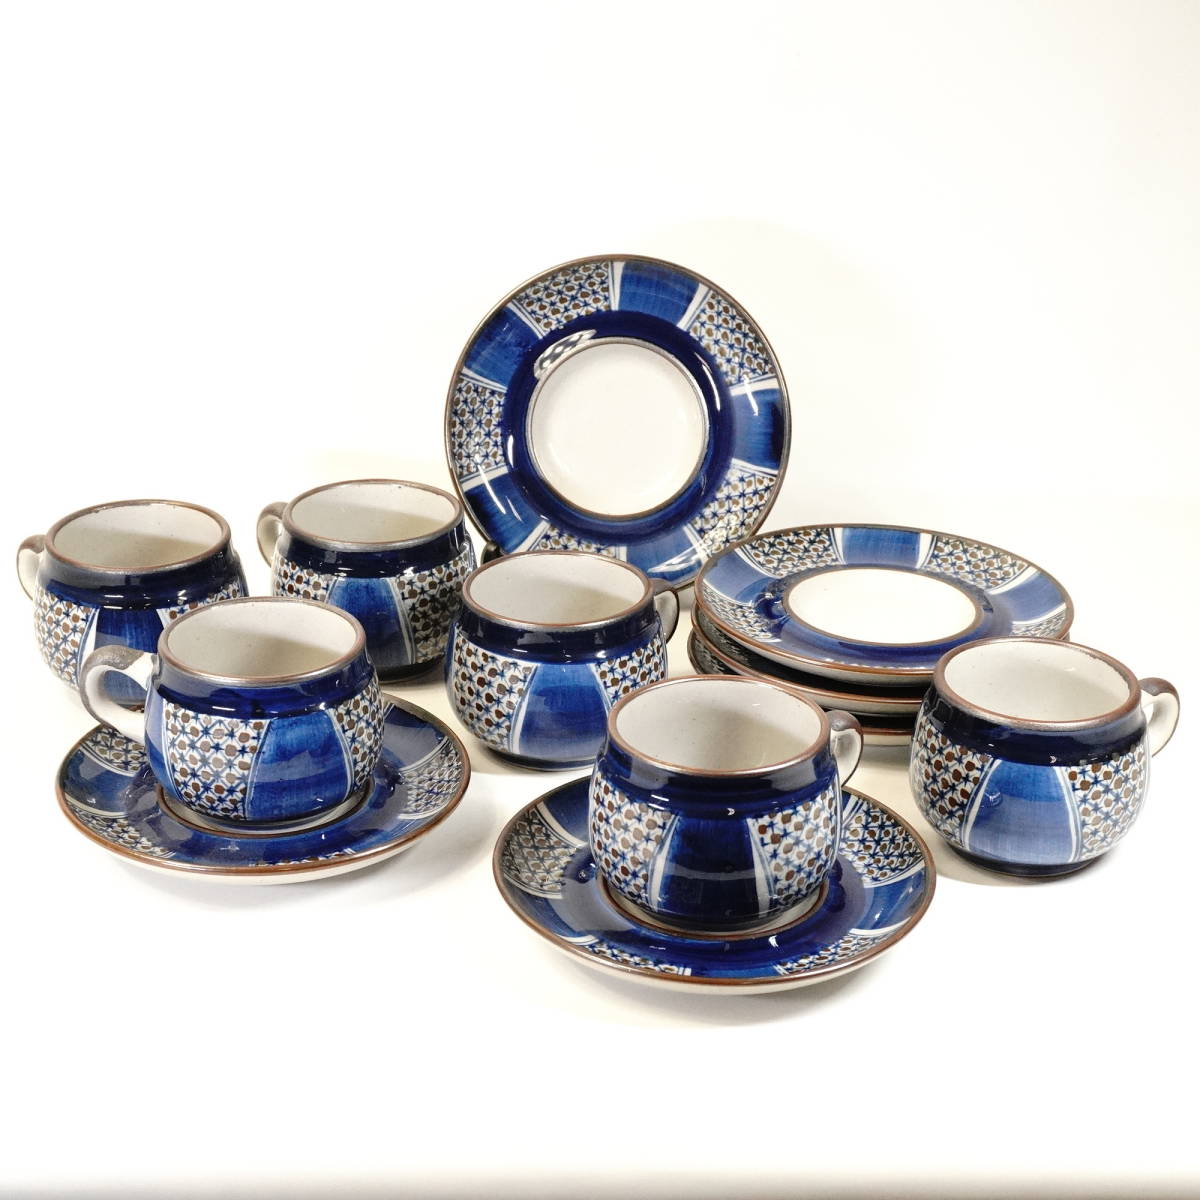 Noritake Noritake 古董石杯和碟子 6 件套咖啡手绘蓝色绘画, 质感温暖的时尚杰作 OSO, 茶具, 杯子和碟子, 咖啡, 无论是茶还是茶